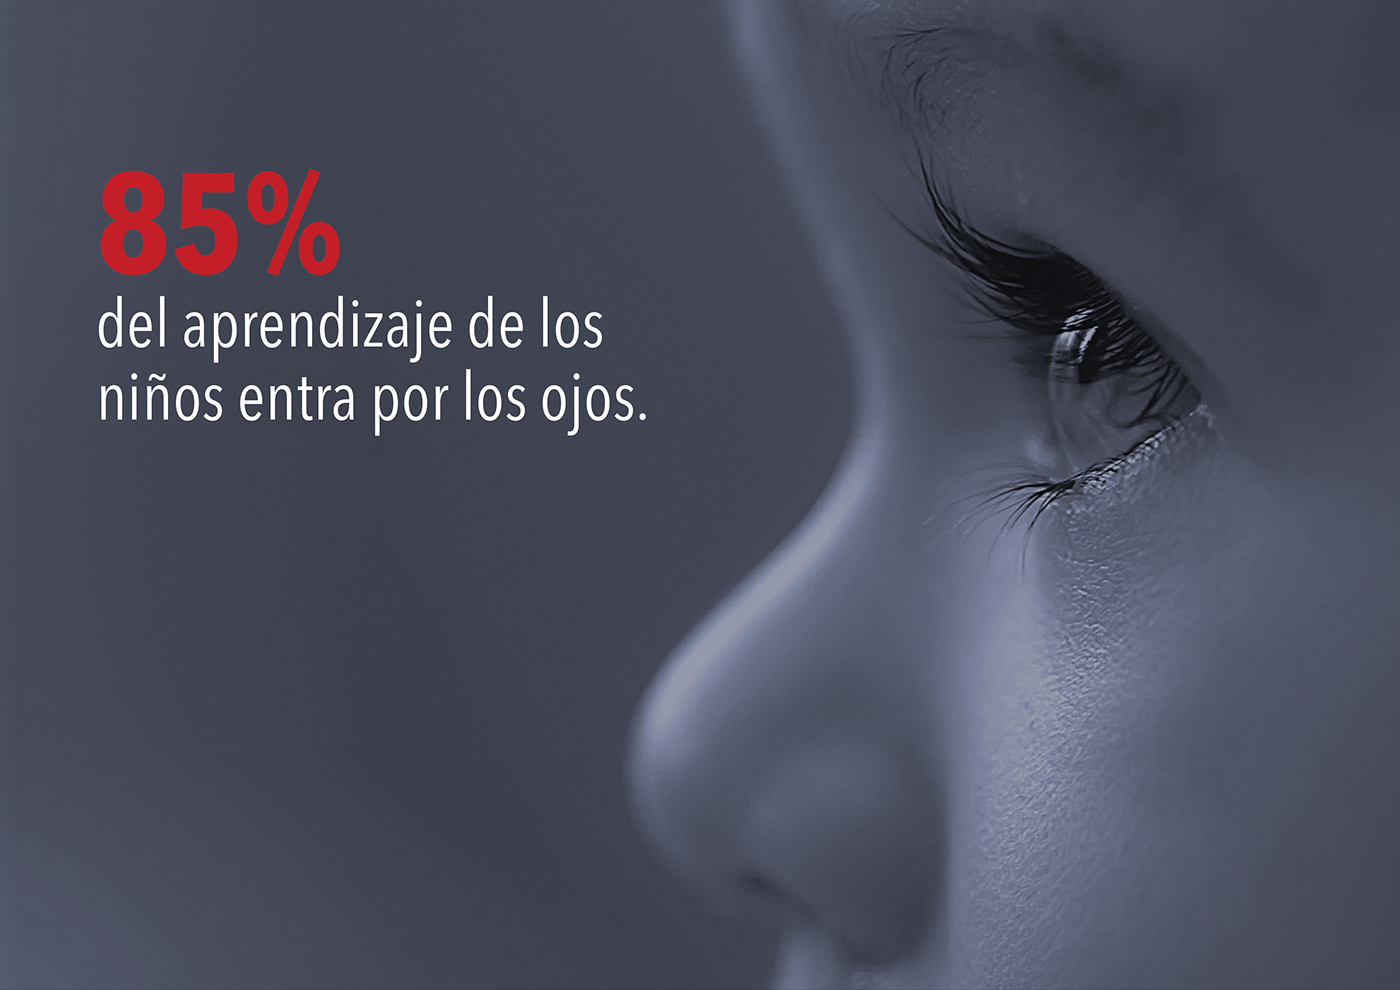 Campaña social save the children niños abuso make it stop